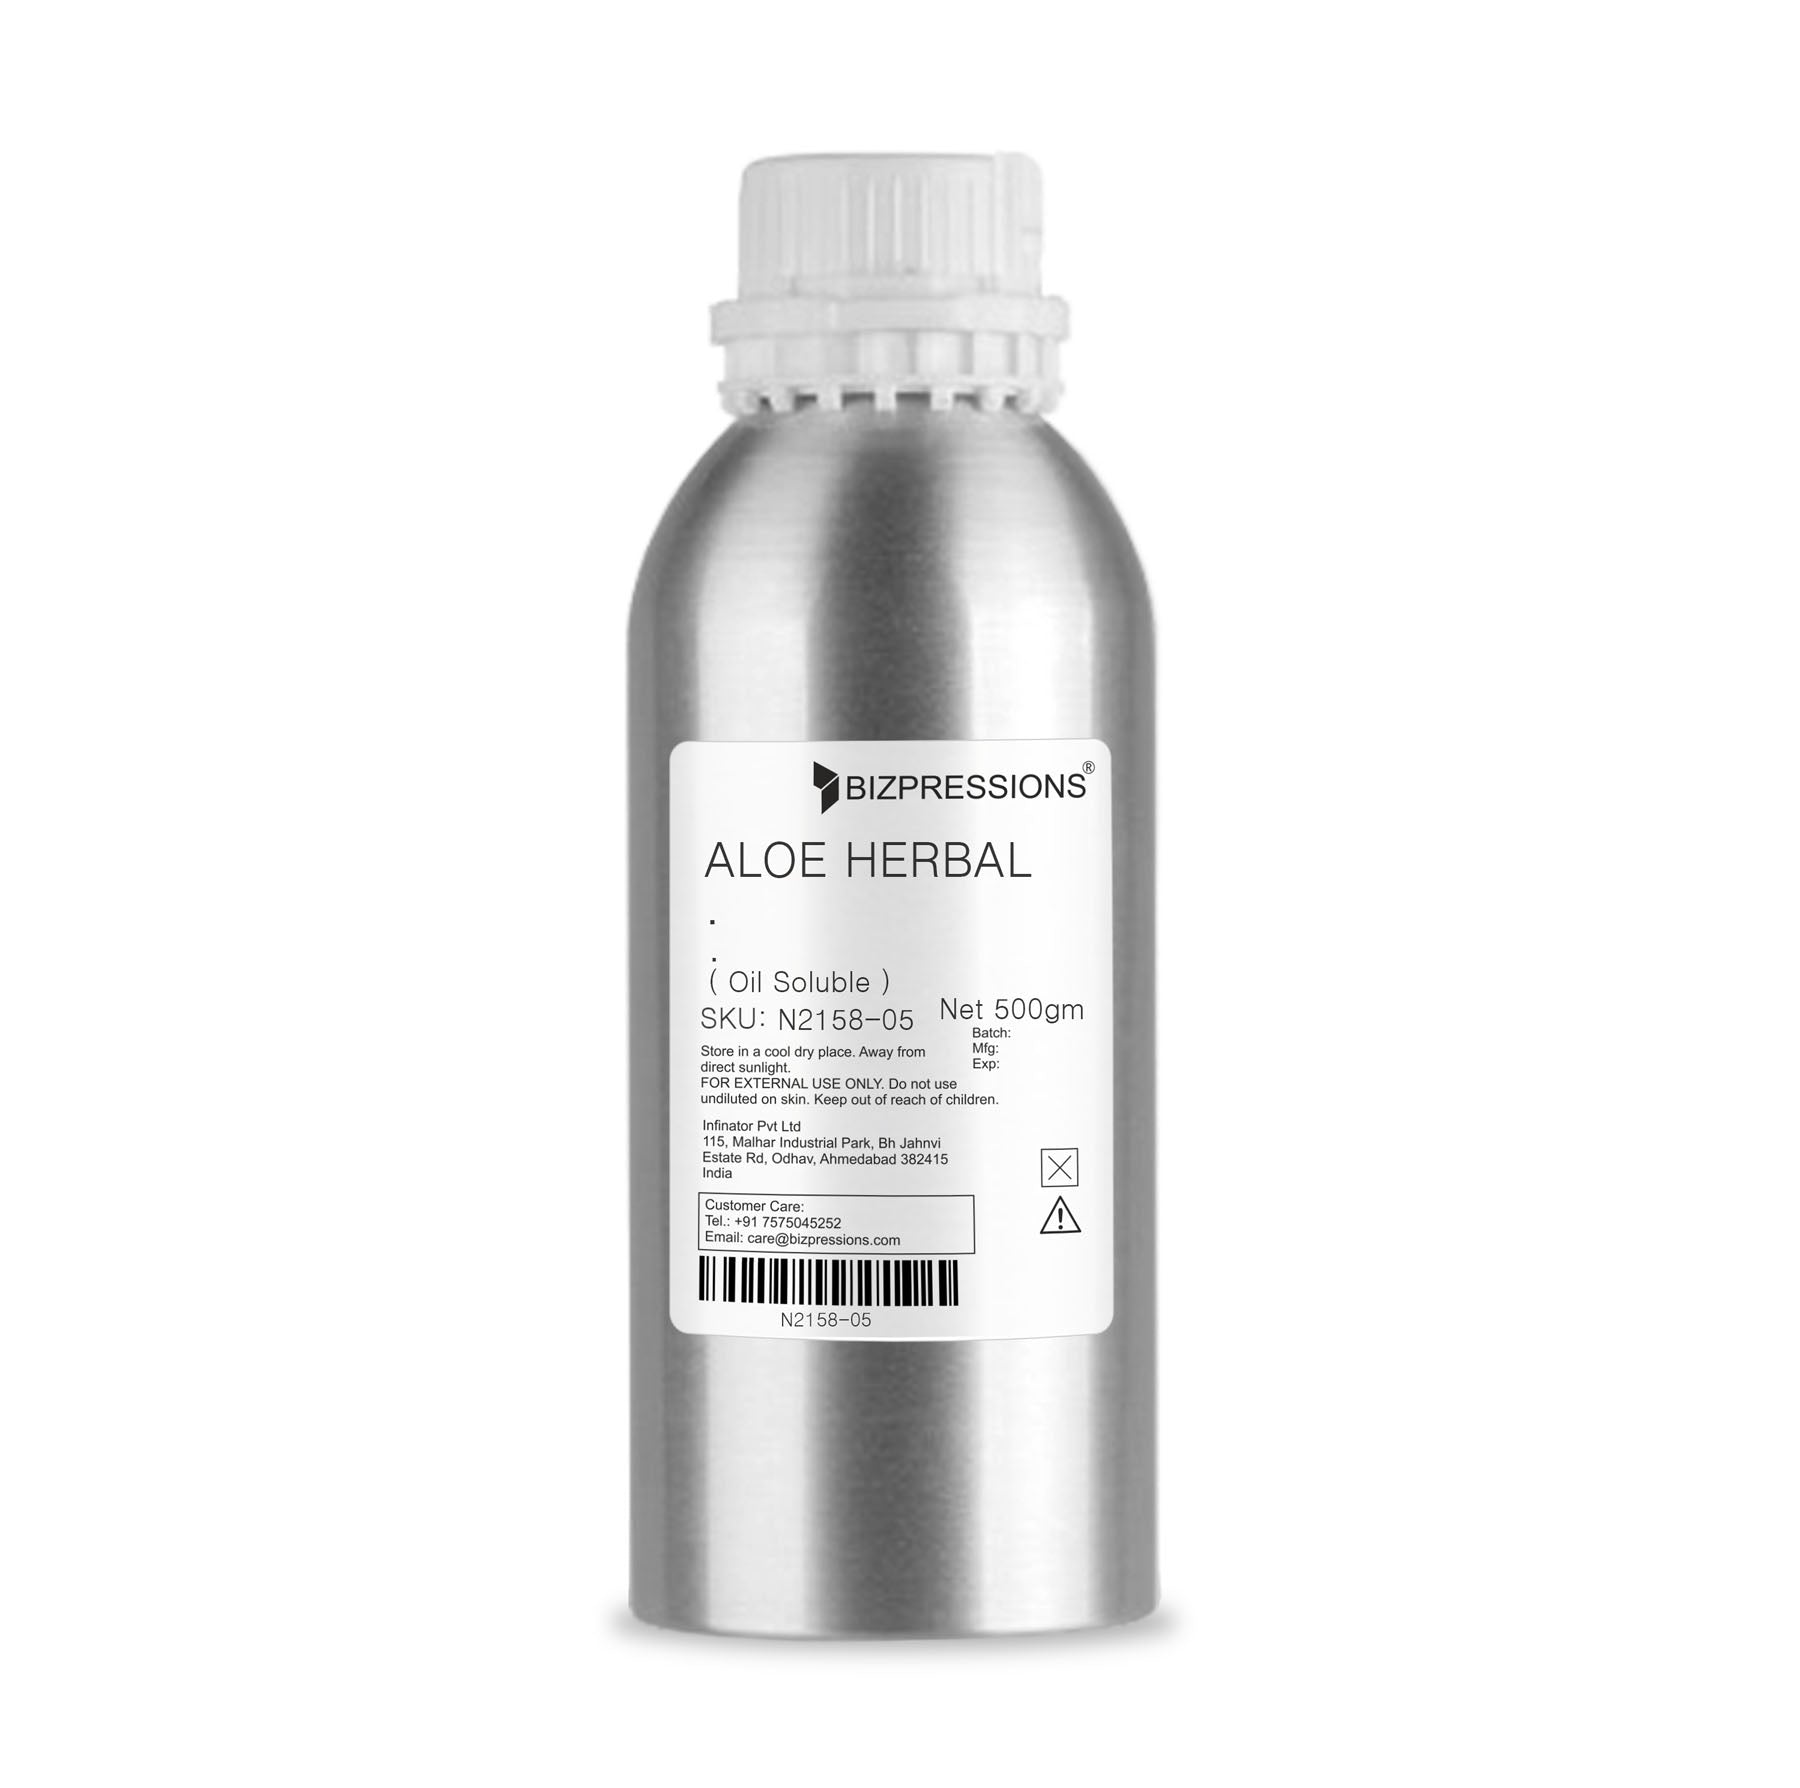 ALOE HERBAL - Fragrance ( Oil Soluble ) - 500 gm